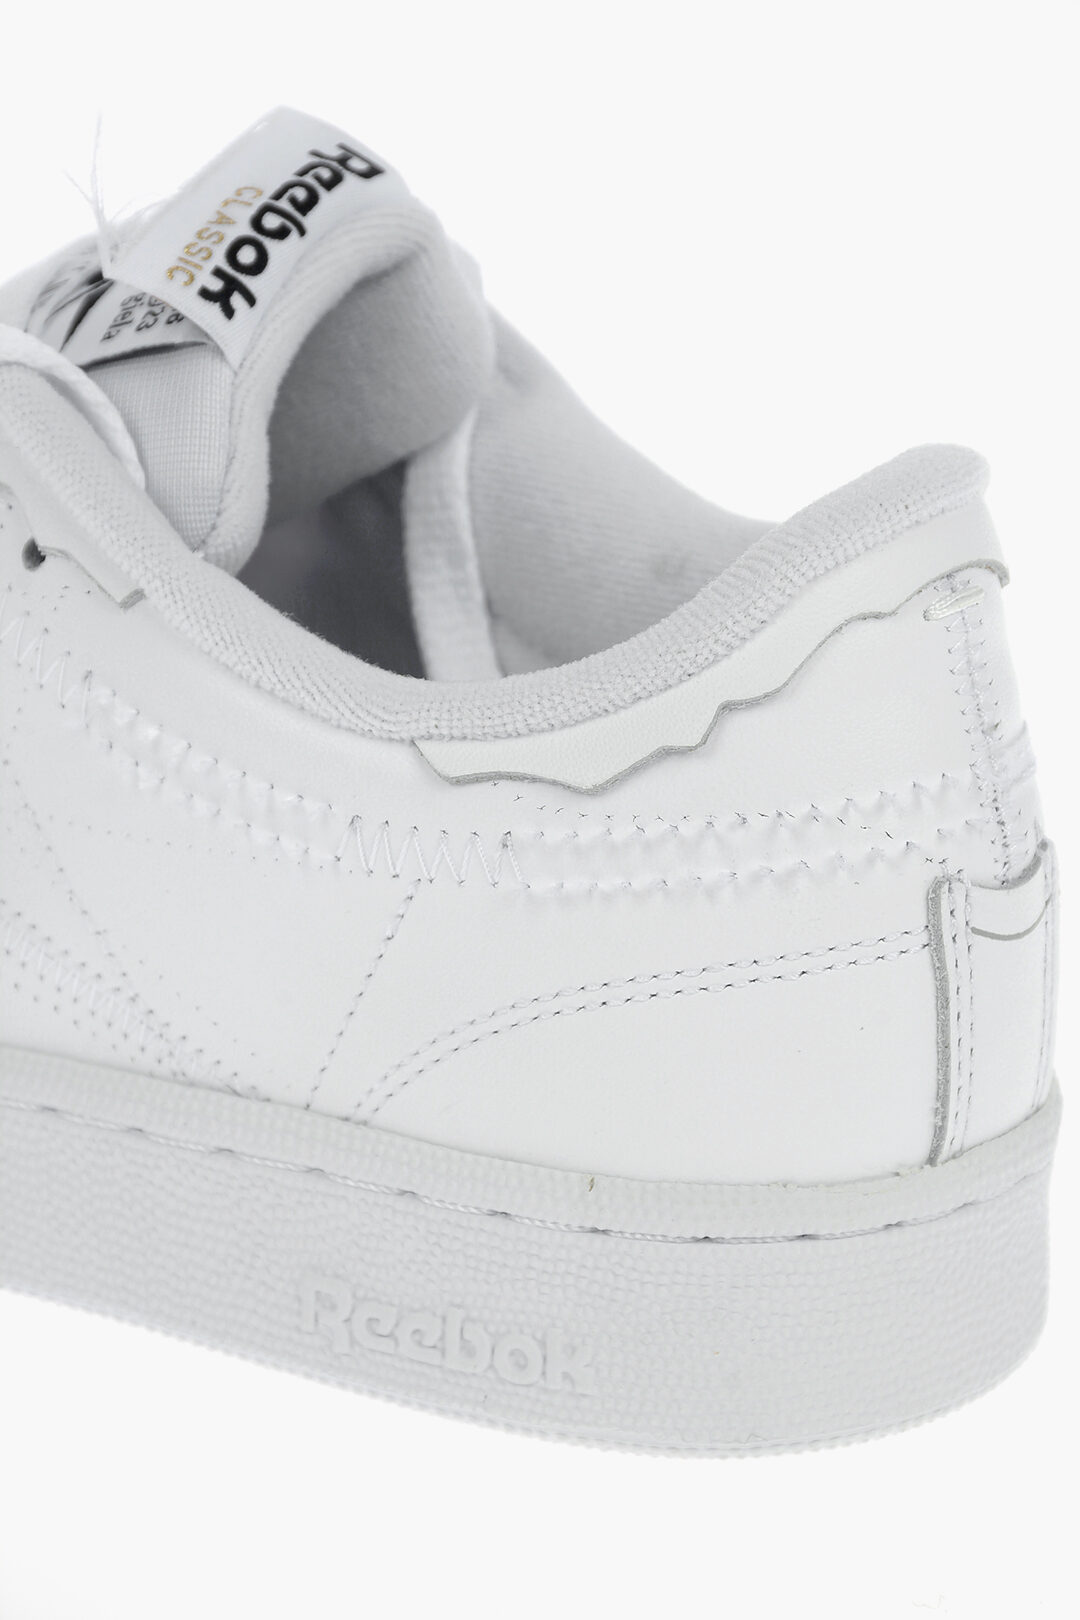 REEBOK Visible Seams PROJECT 0 CC MEMORY OF Sneakers